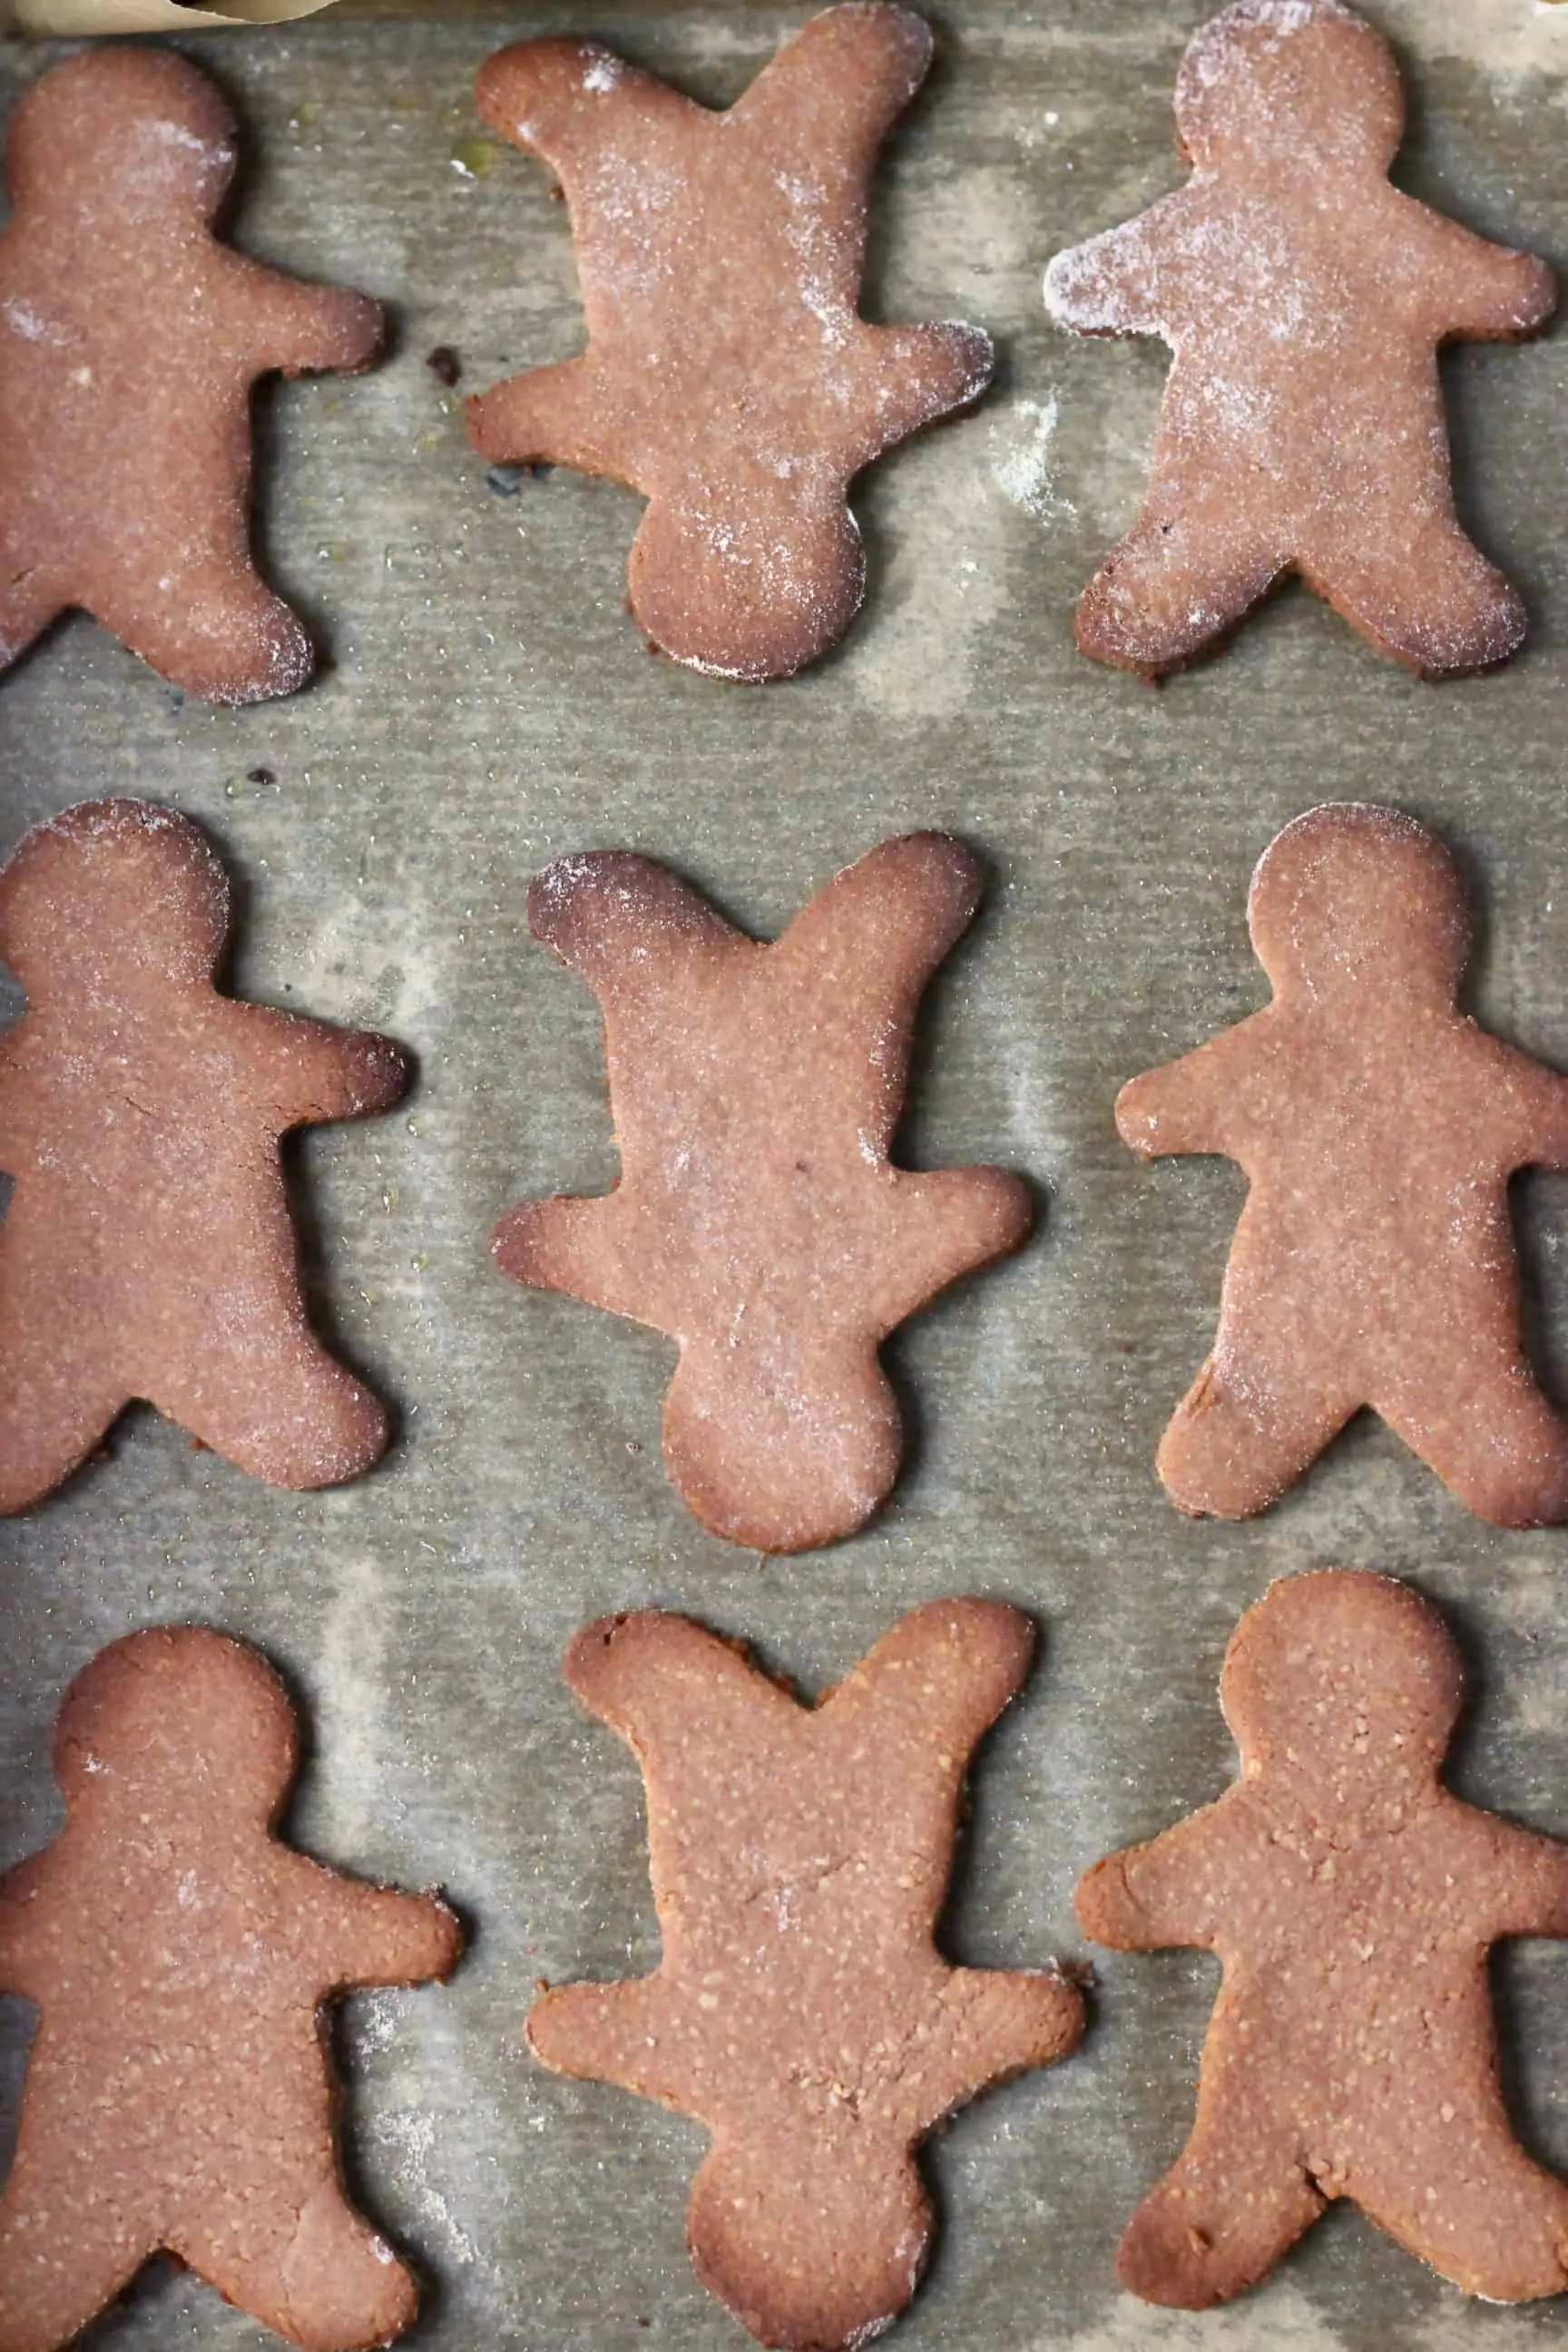 Nine baked gluten-free vegan gingerbread cookies on a sheet of baking paper